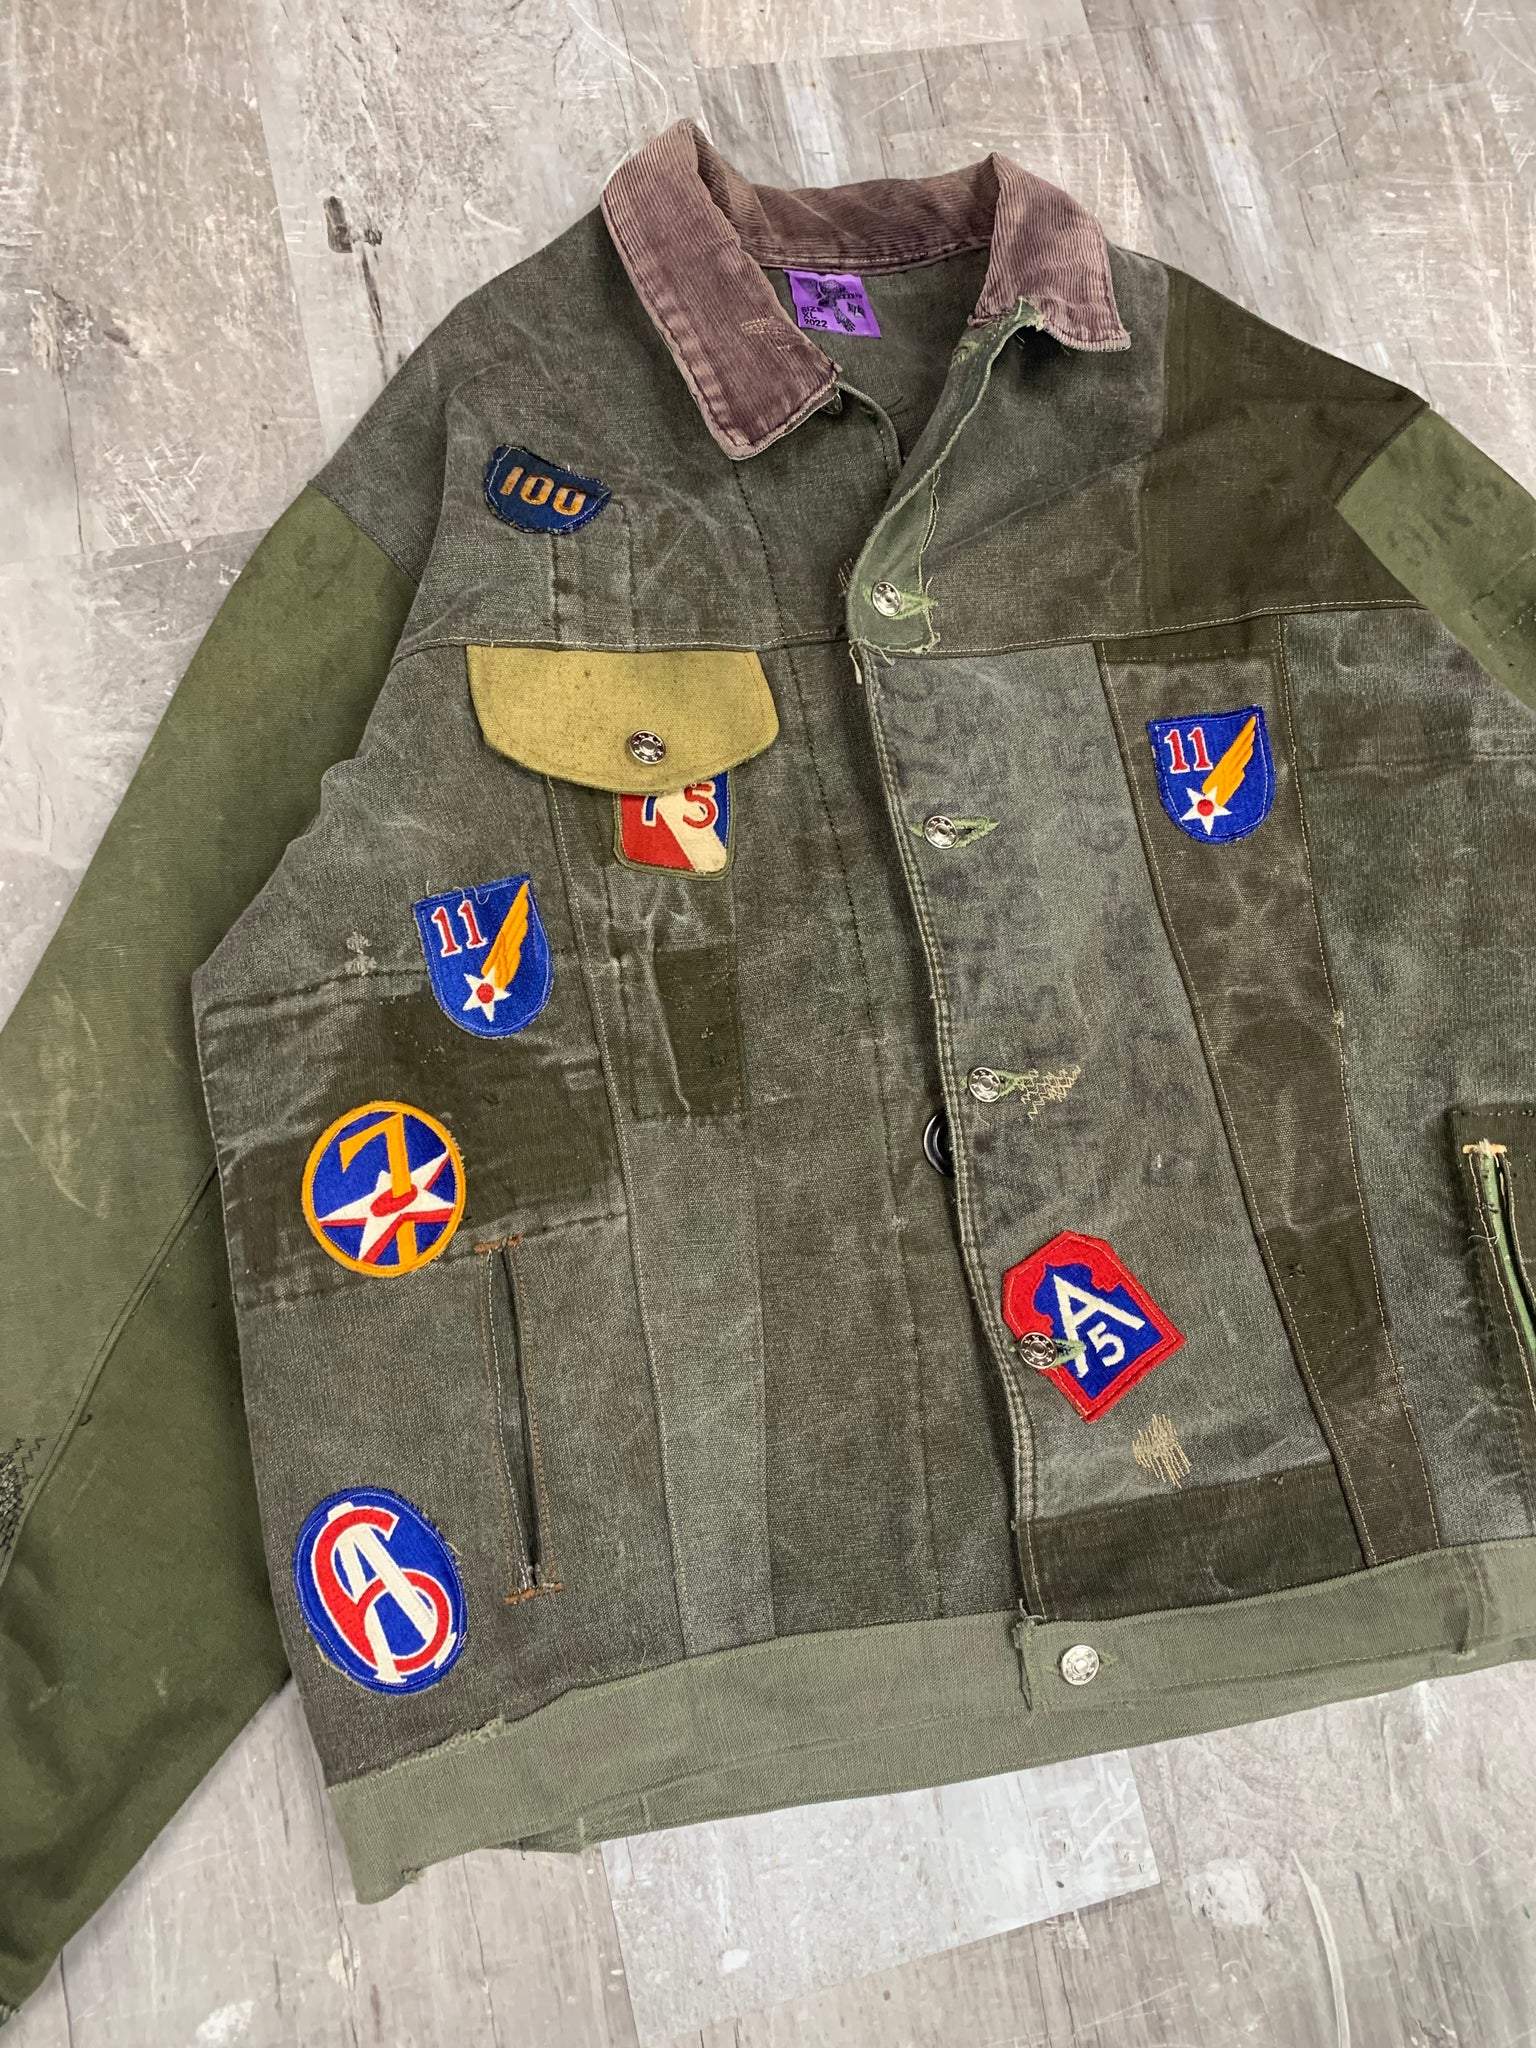 1 of 1 Army Canvas Jacket #2 - XL